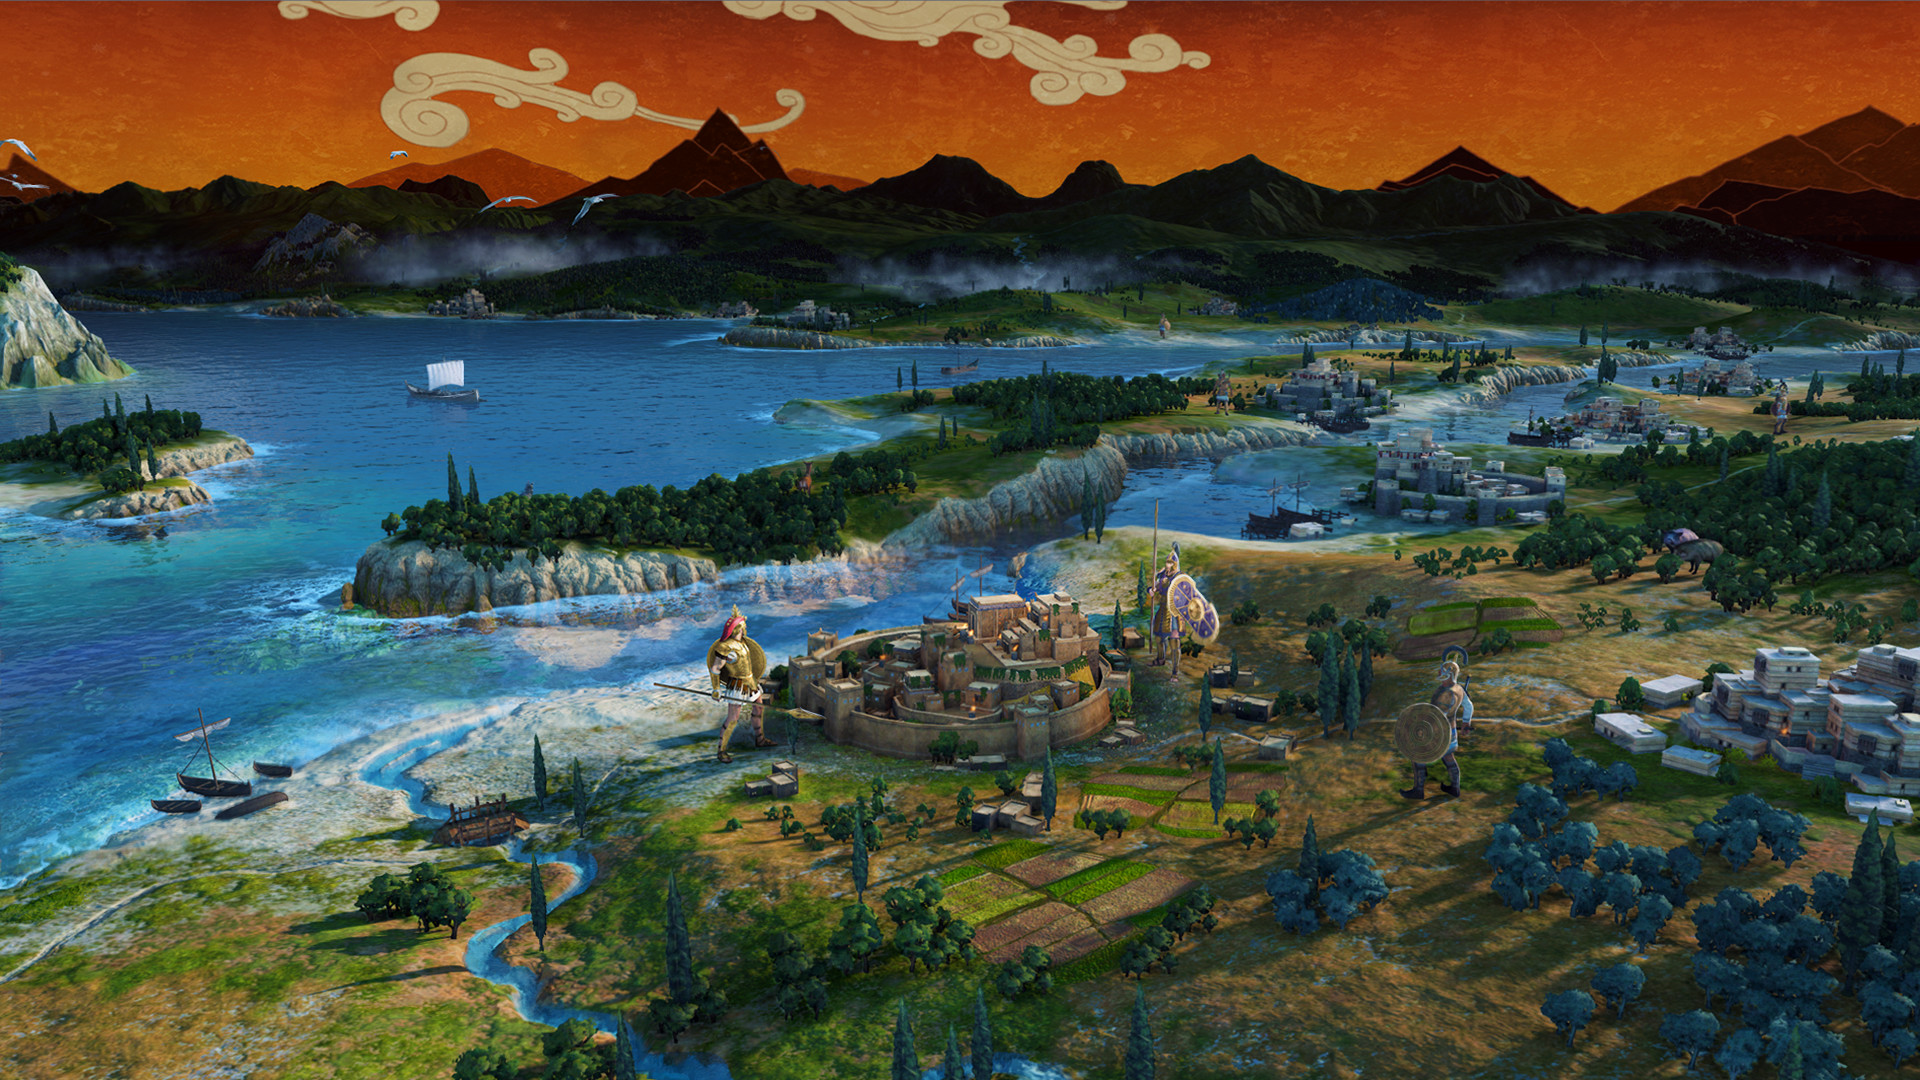 Video Game A Total War Saga: TROY HD Wallpaper | Background Image